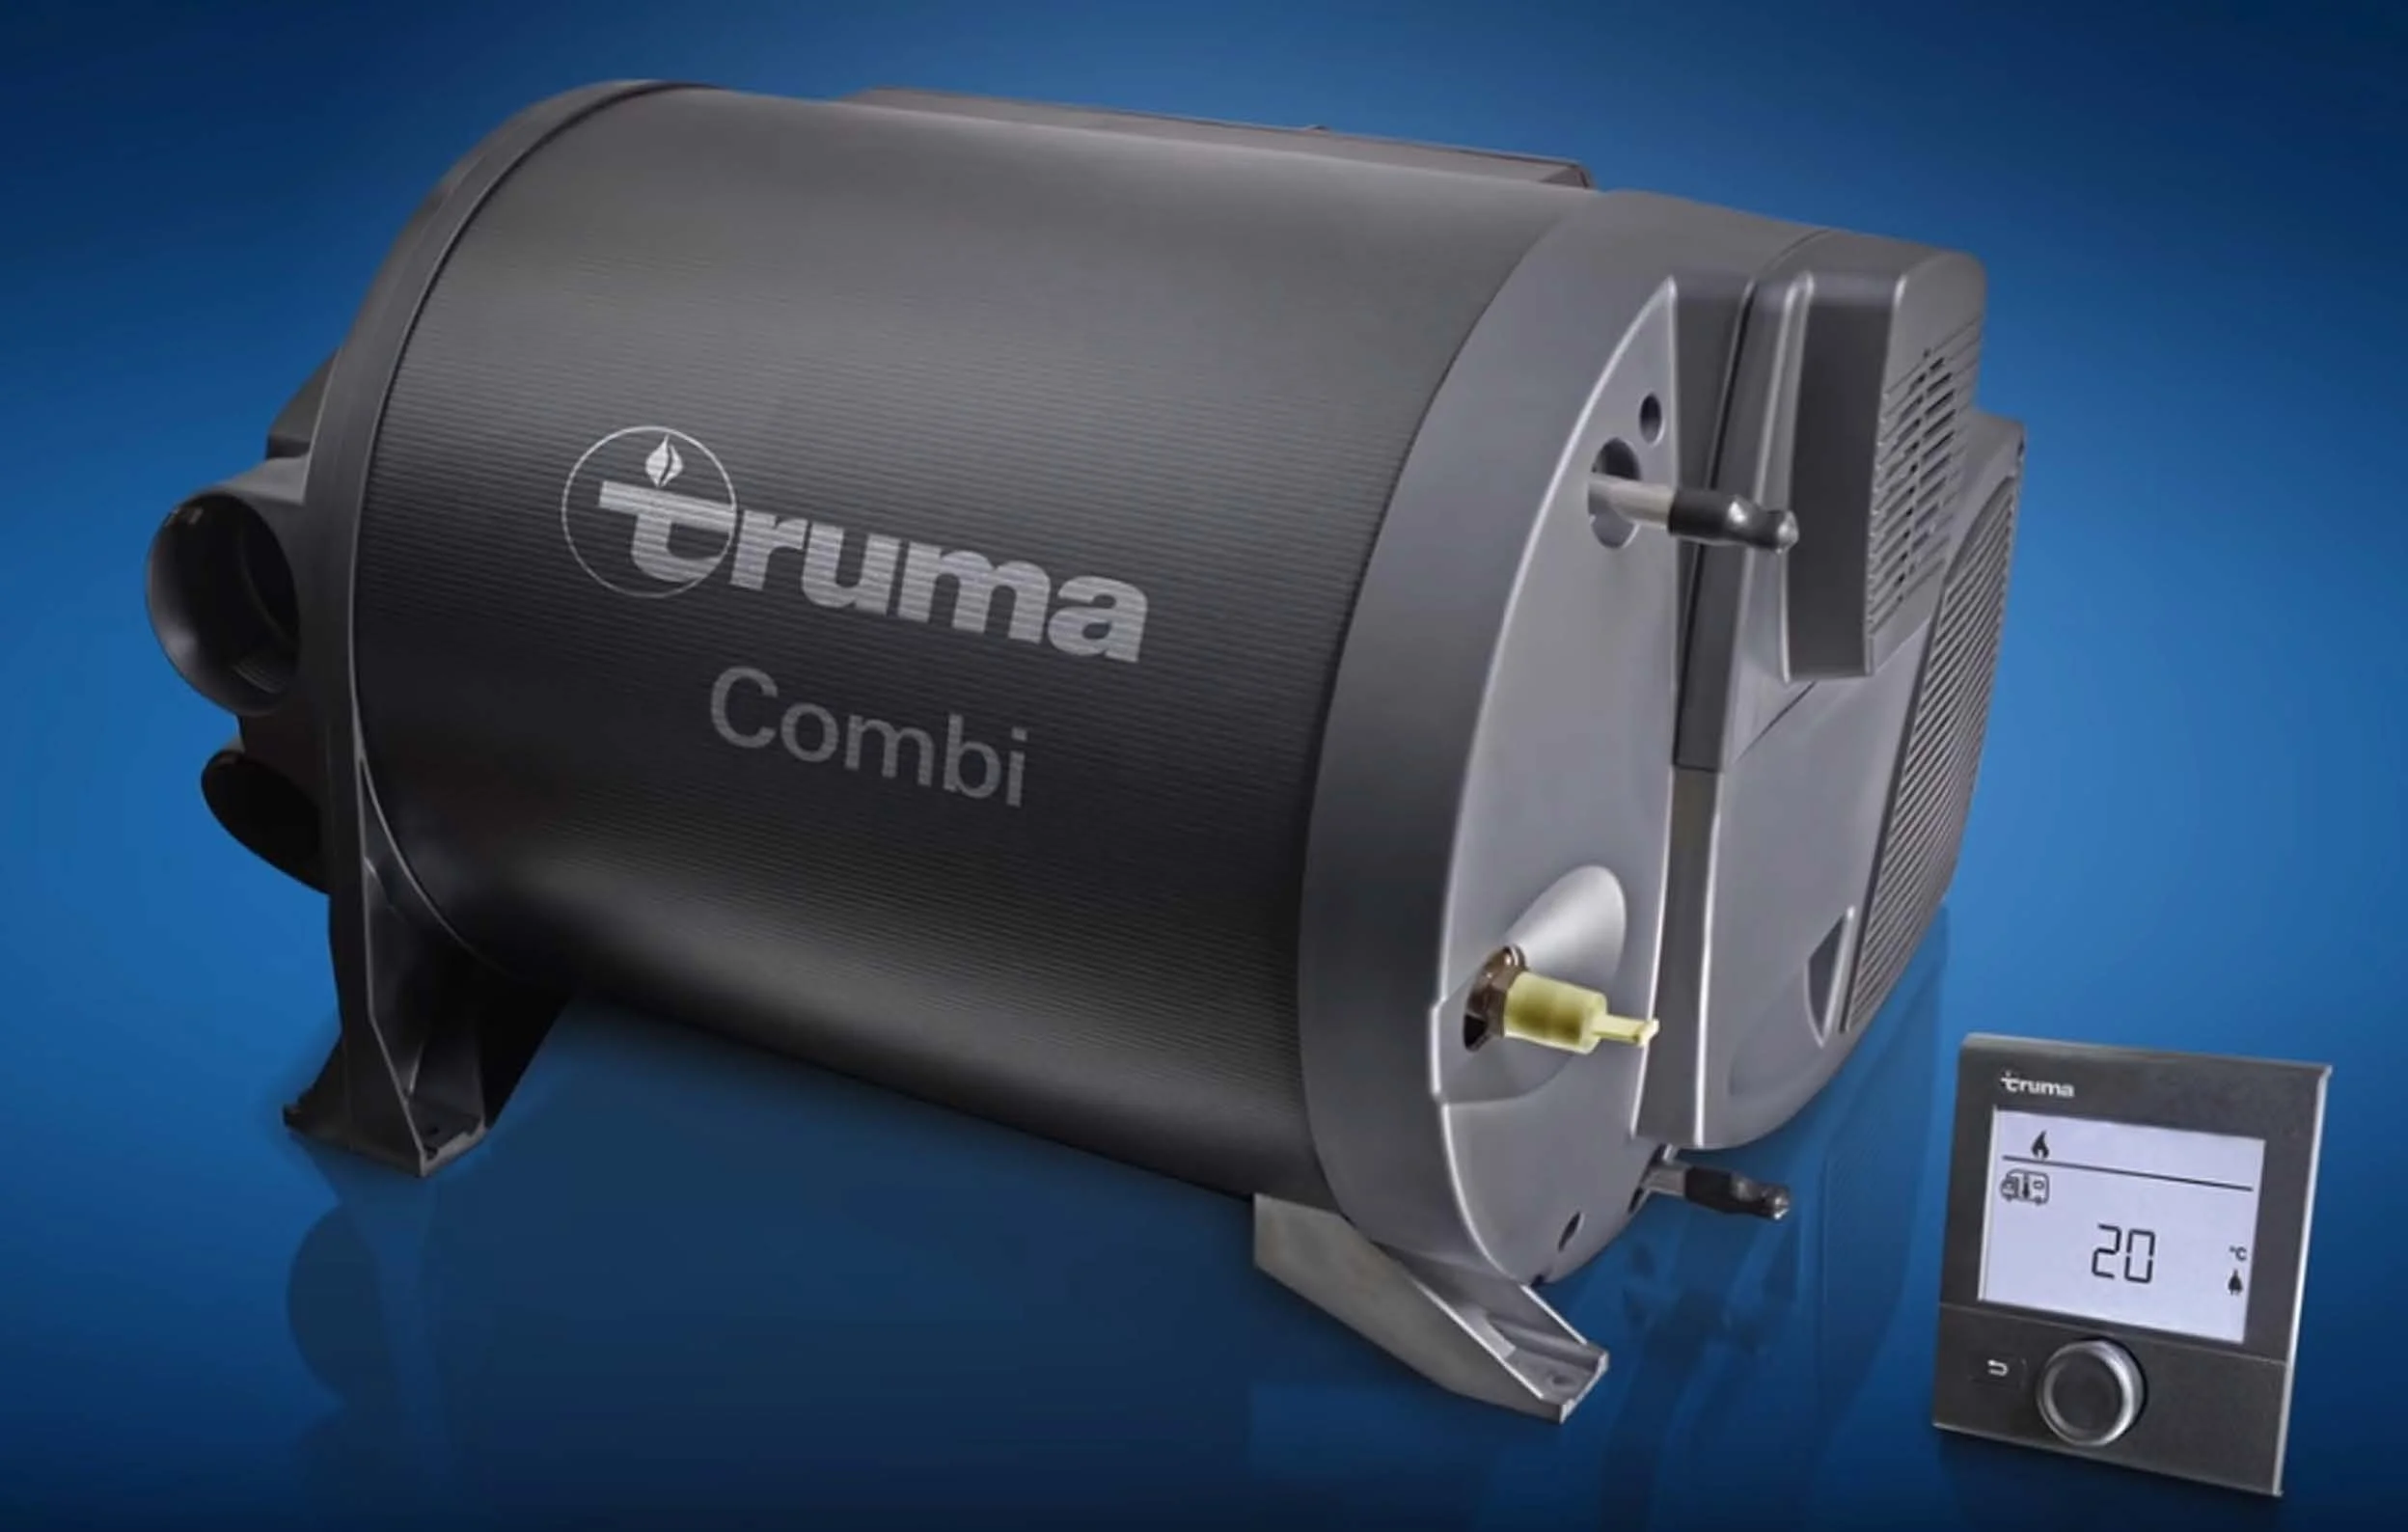 Truma's Combi4 air and water heater